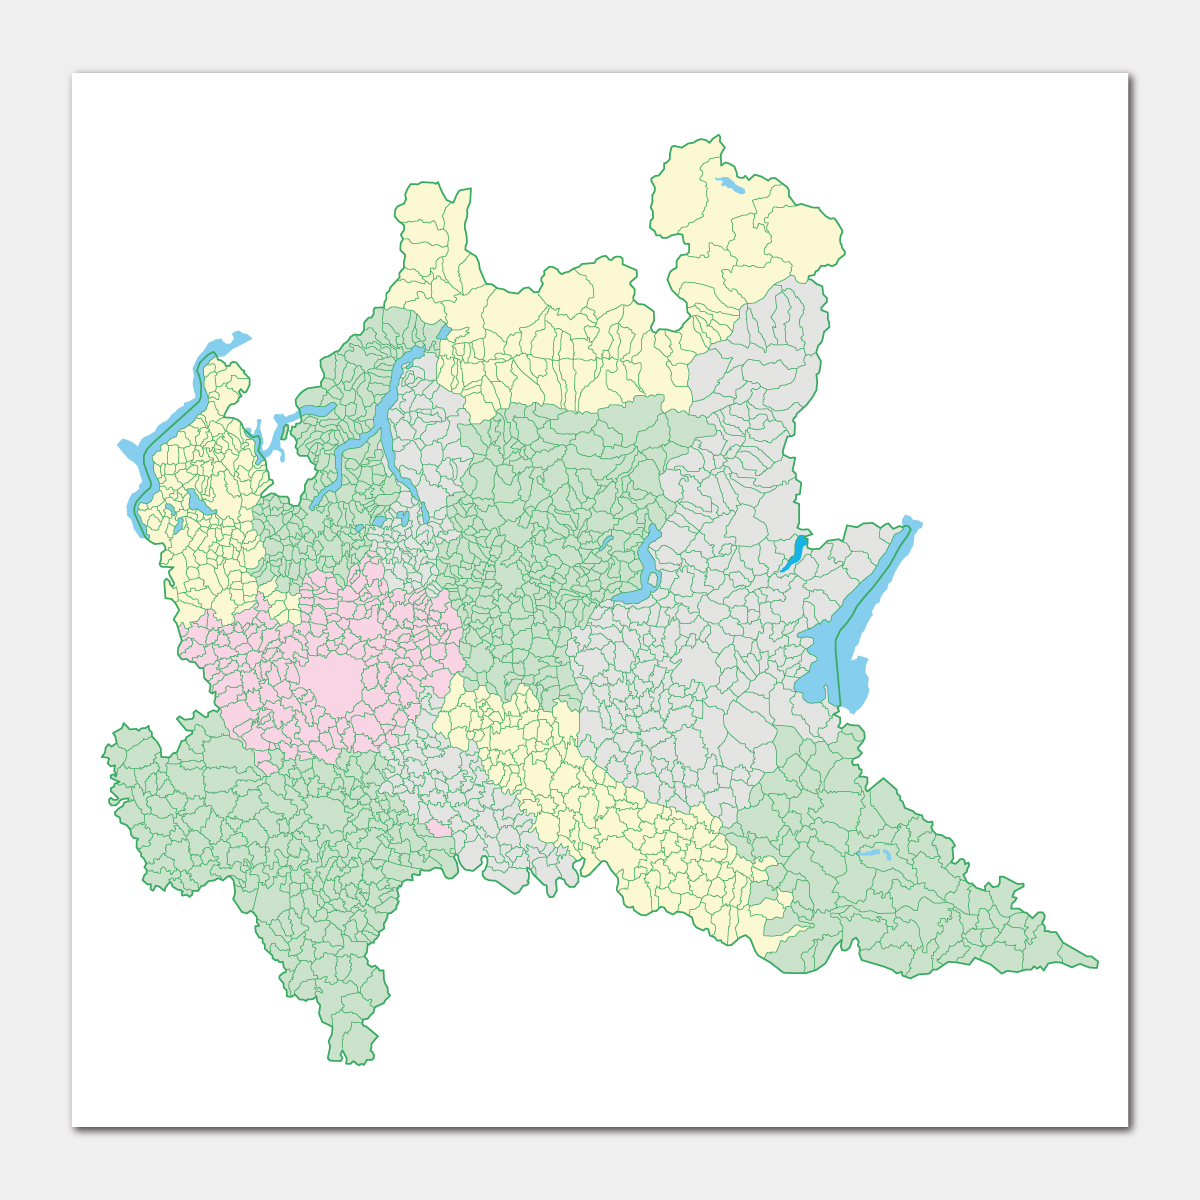 %luca.fruzza/visual.designerRegione Lombardia   Official townships map